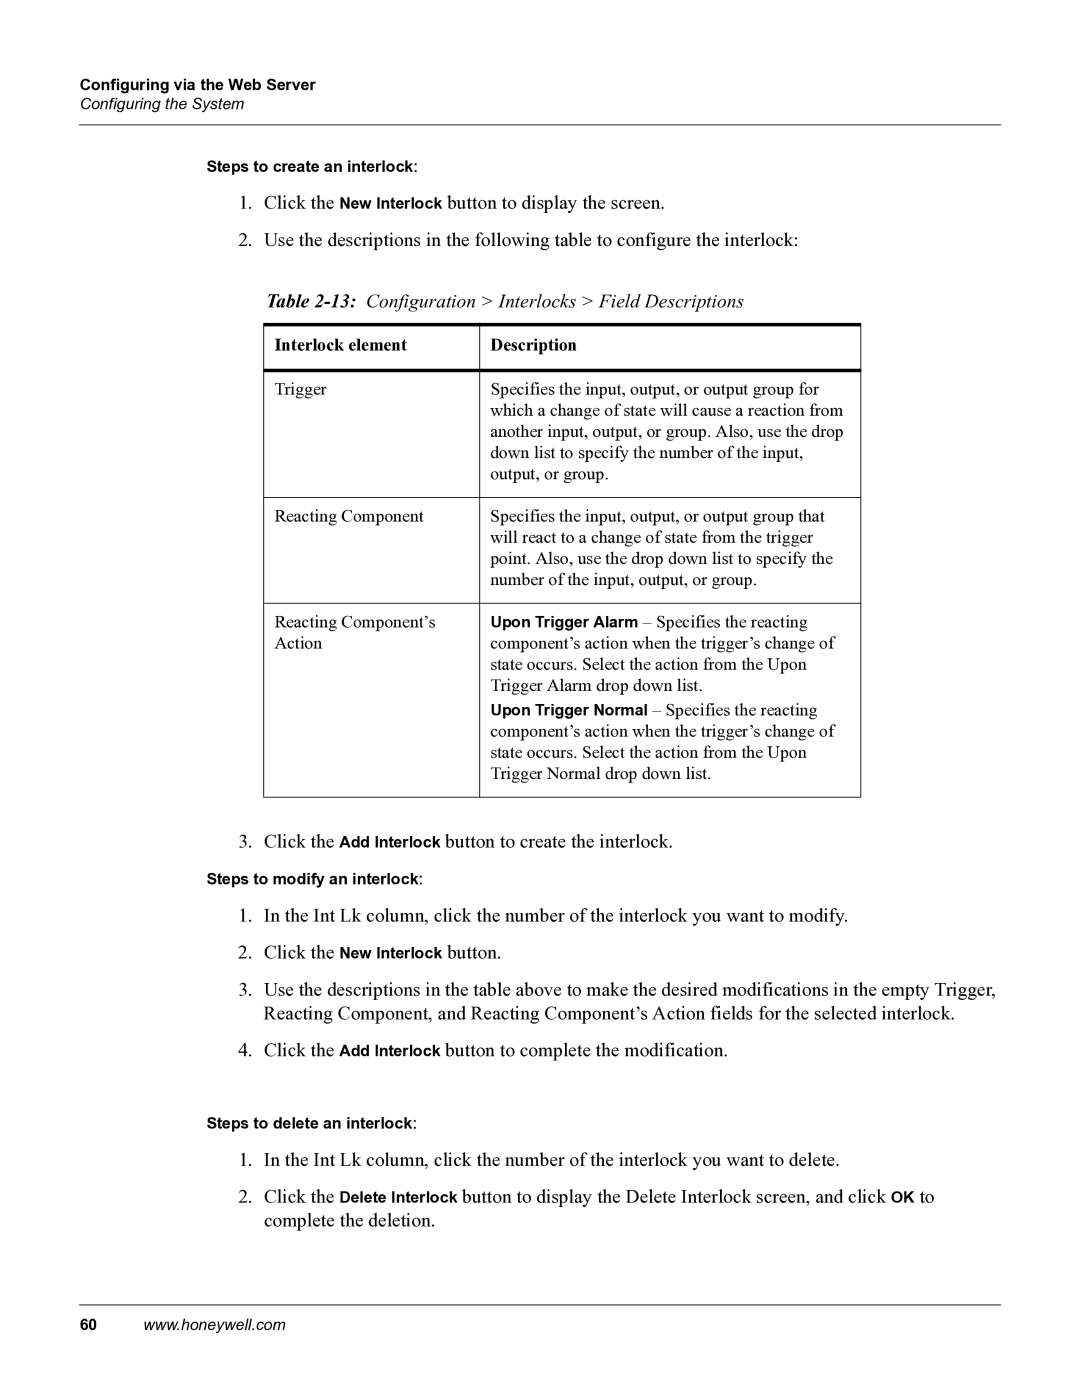 Honeywell 800-04410, NetAXS manual 13Configuration Interlocks Field Descriptions, Interlock element Description 